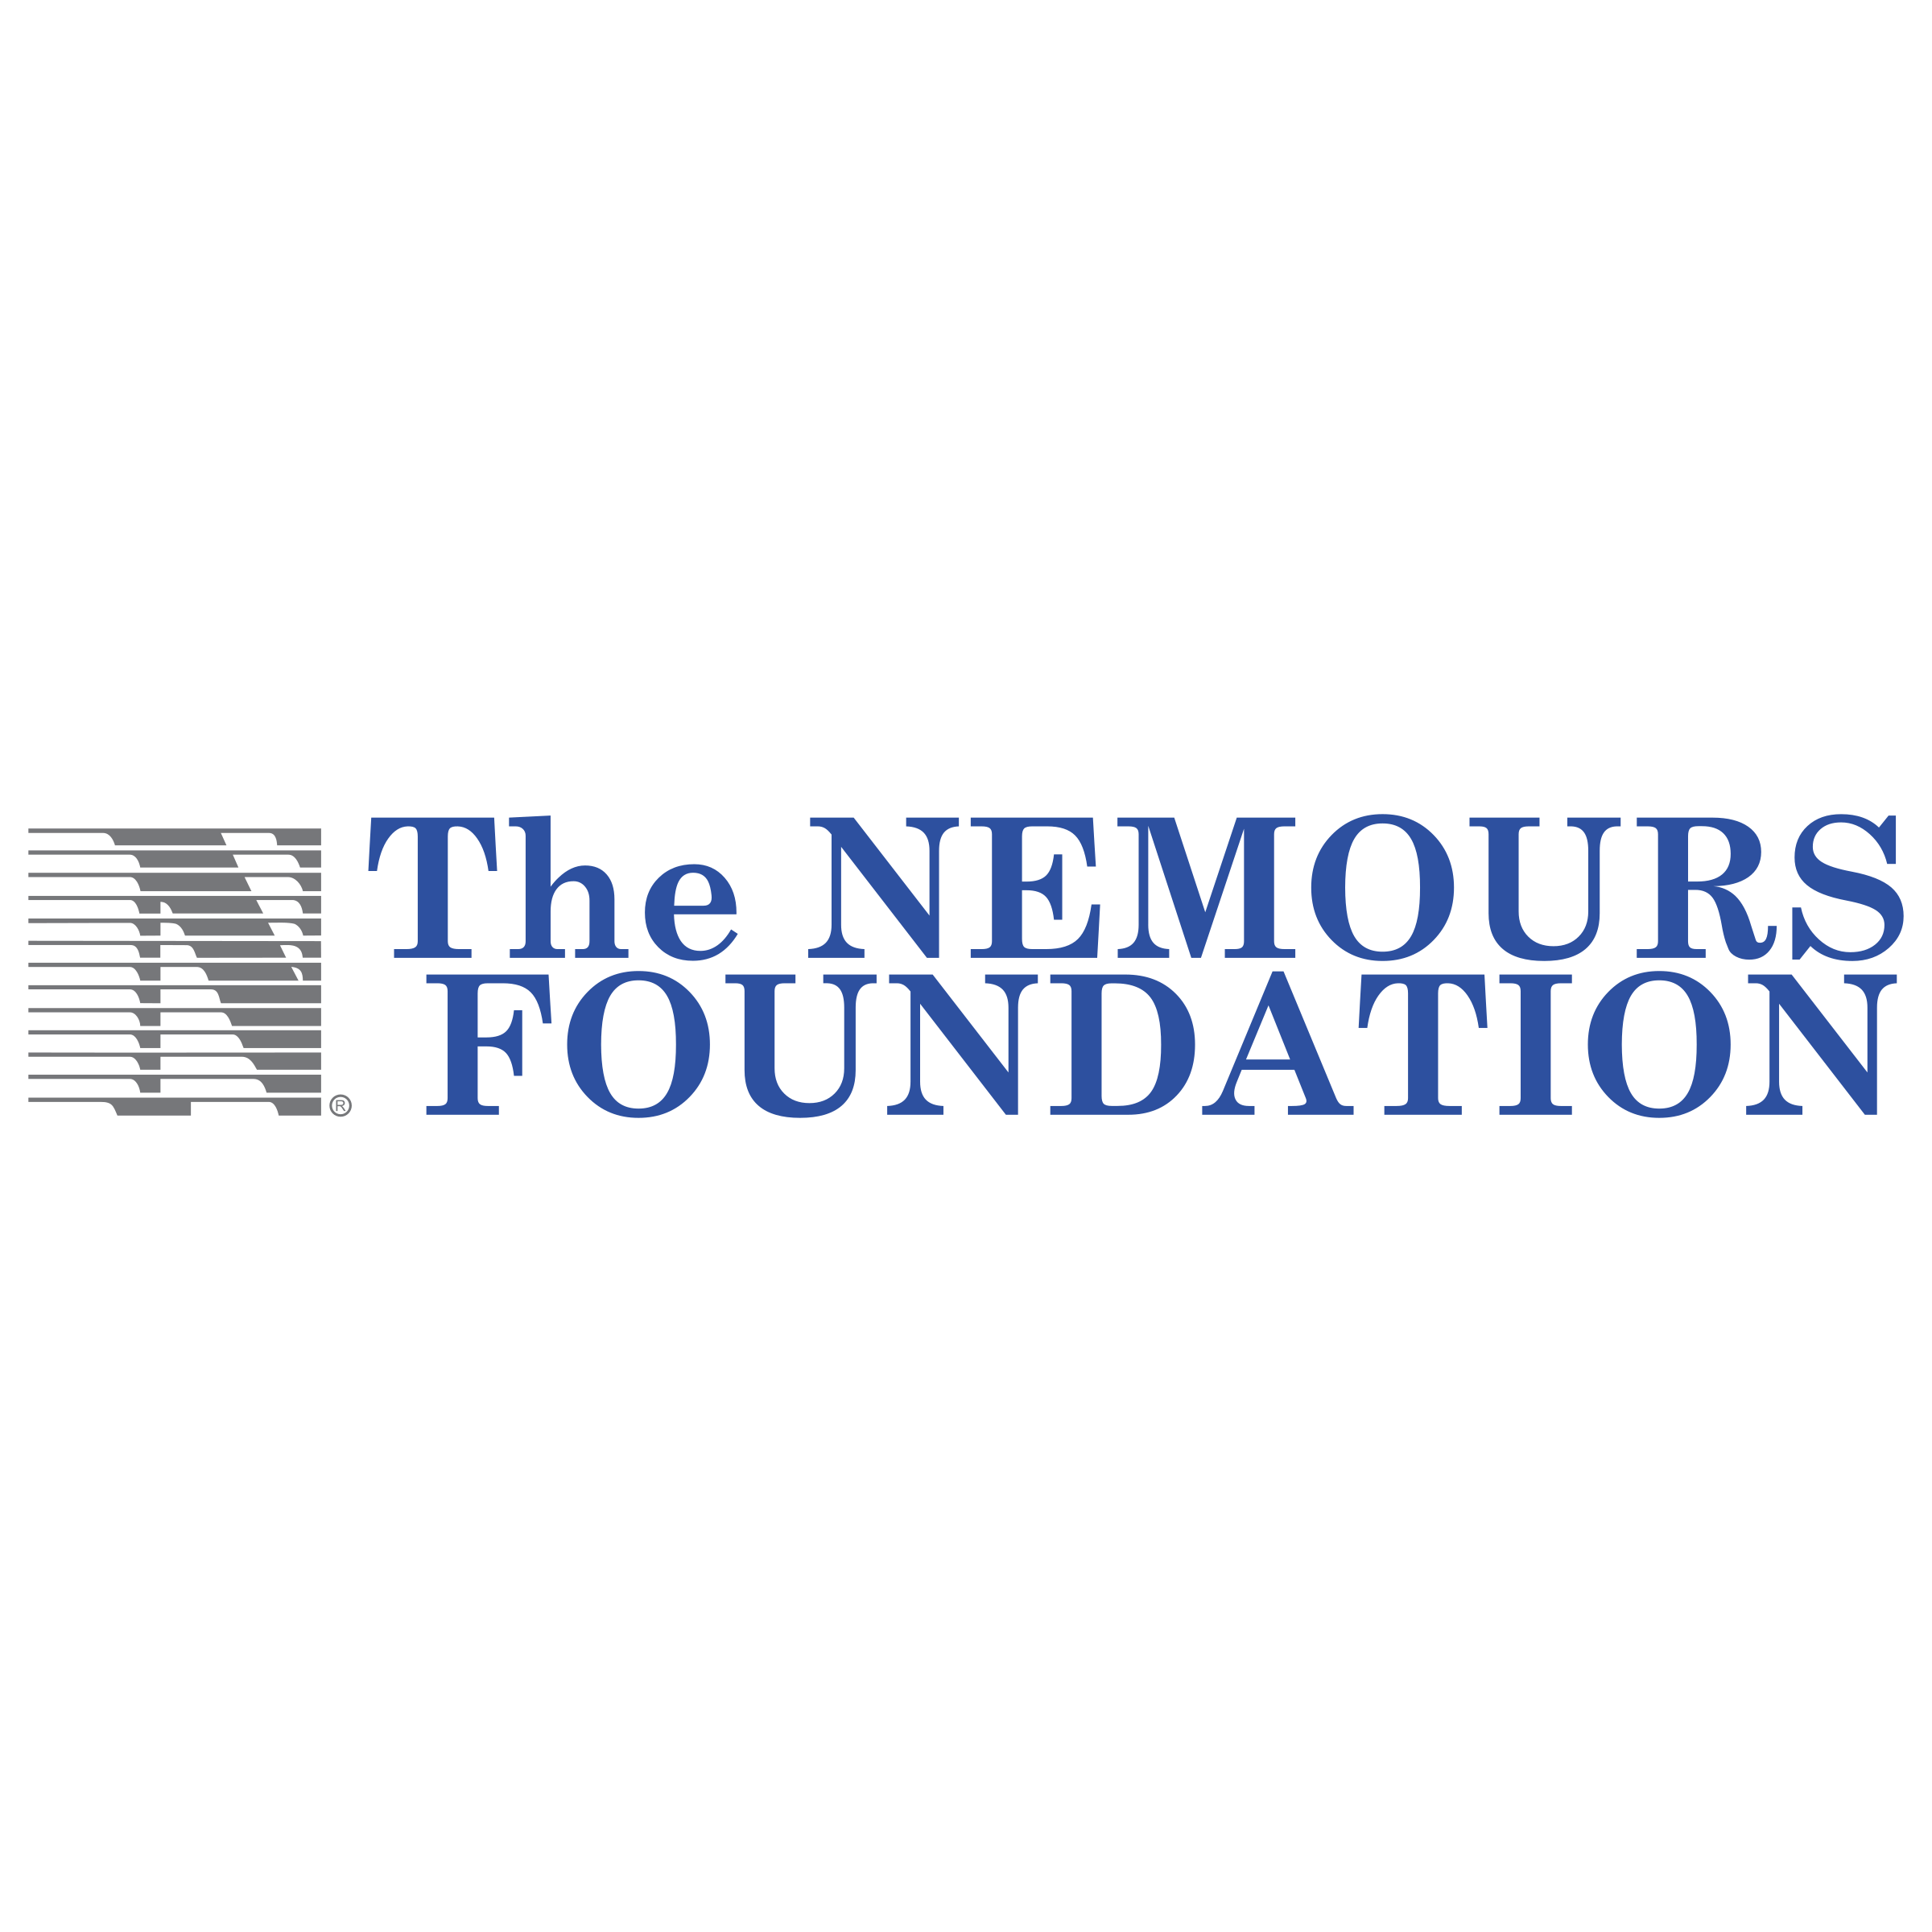 Nemours Logo - The Nemours Foundation Logo PNG Transparent & SVG Vector - Freebie ...